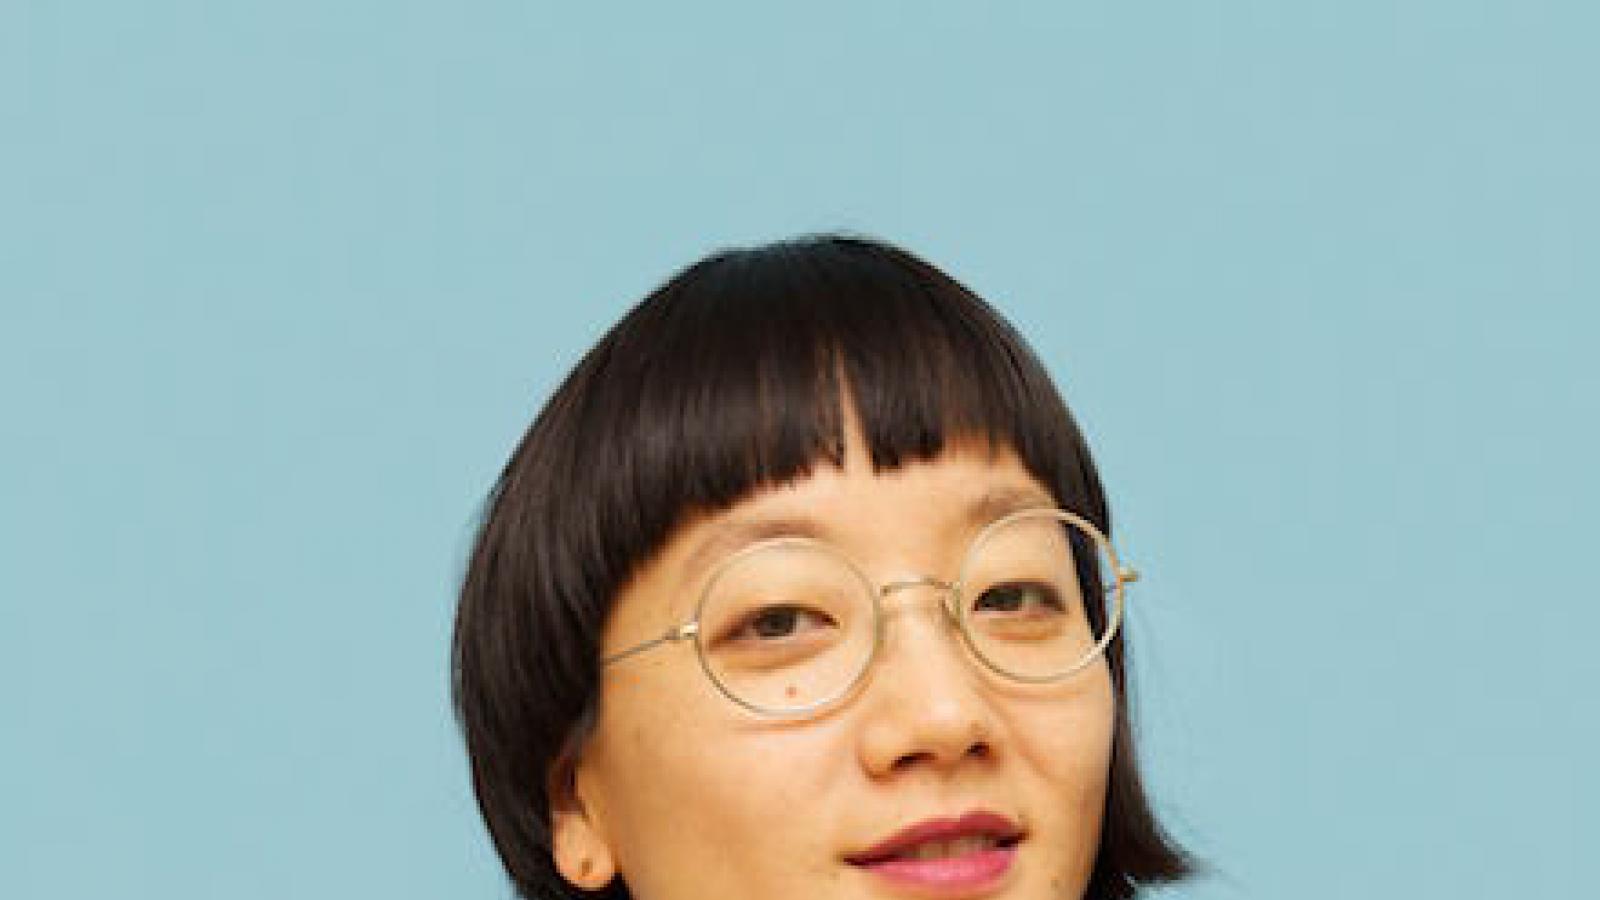 headshot of the artist Christine Sun Kim